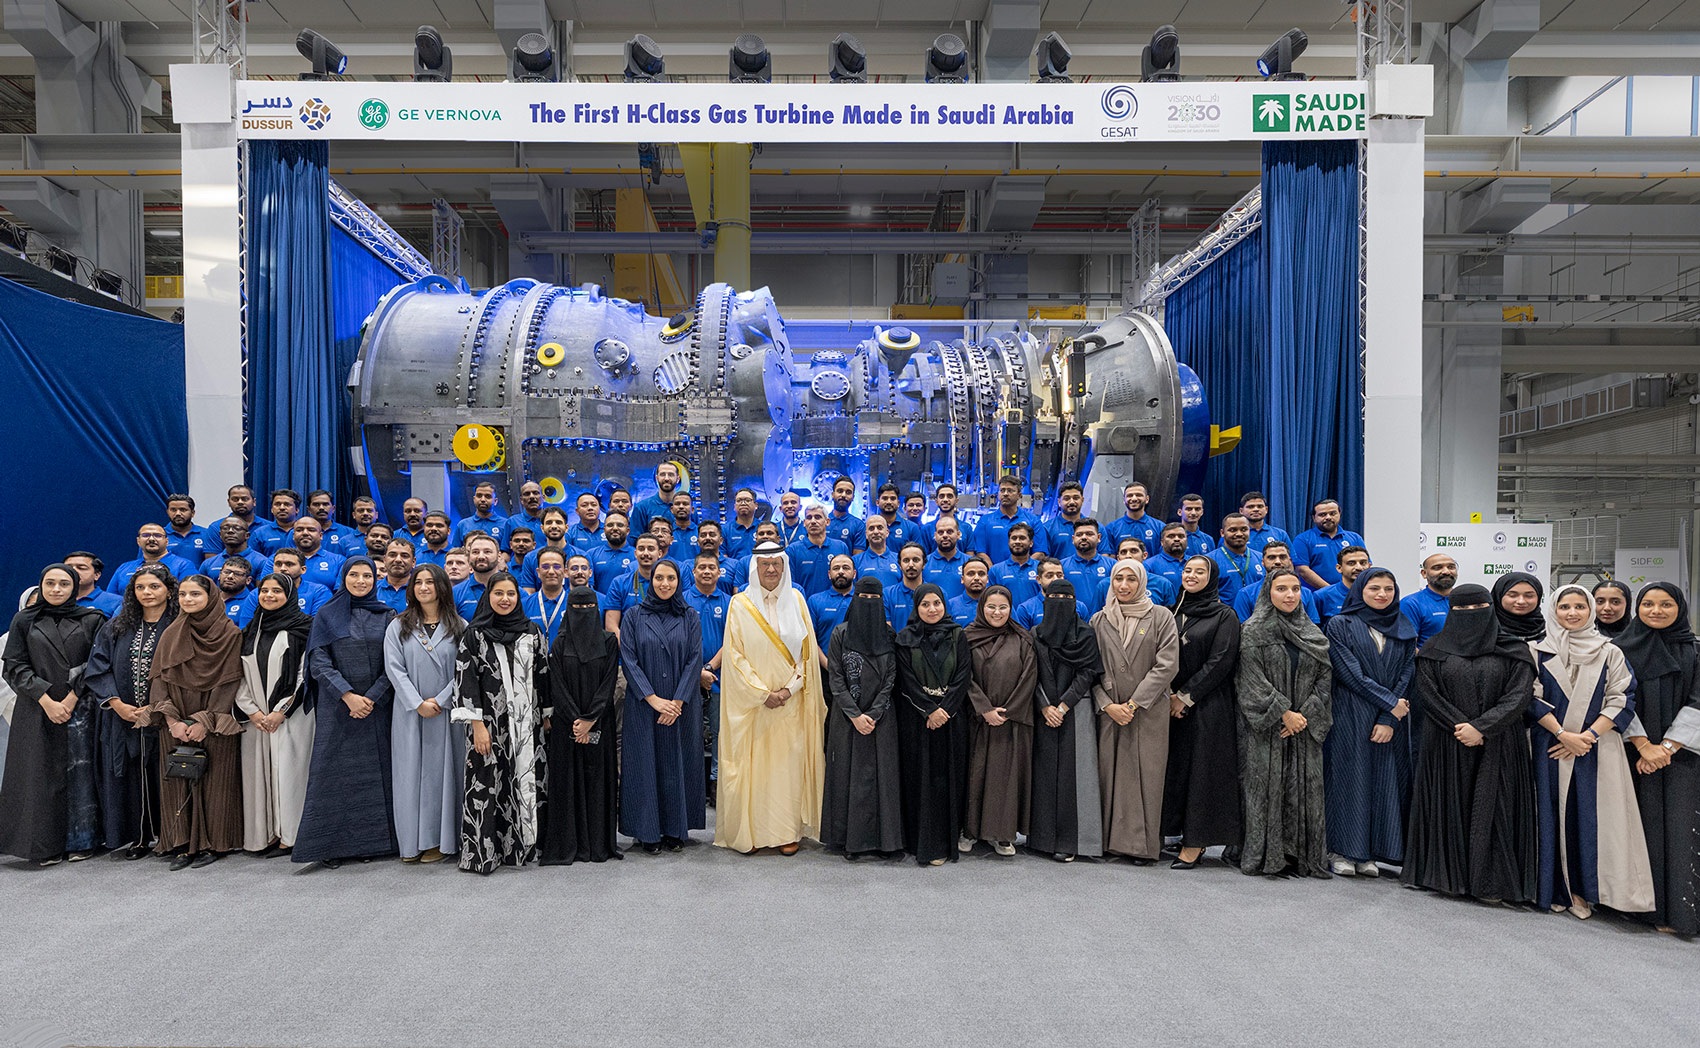 Celebration of first H-Class gas turbine made in Saudi Arabia